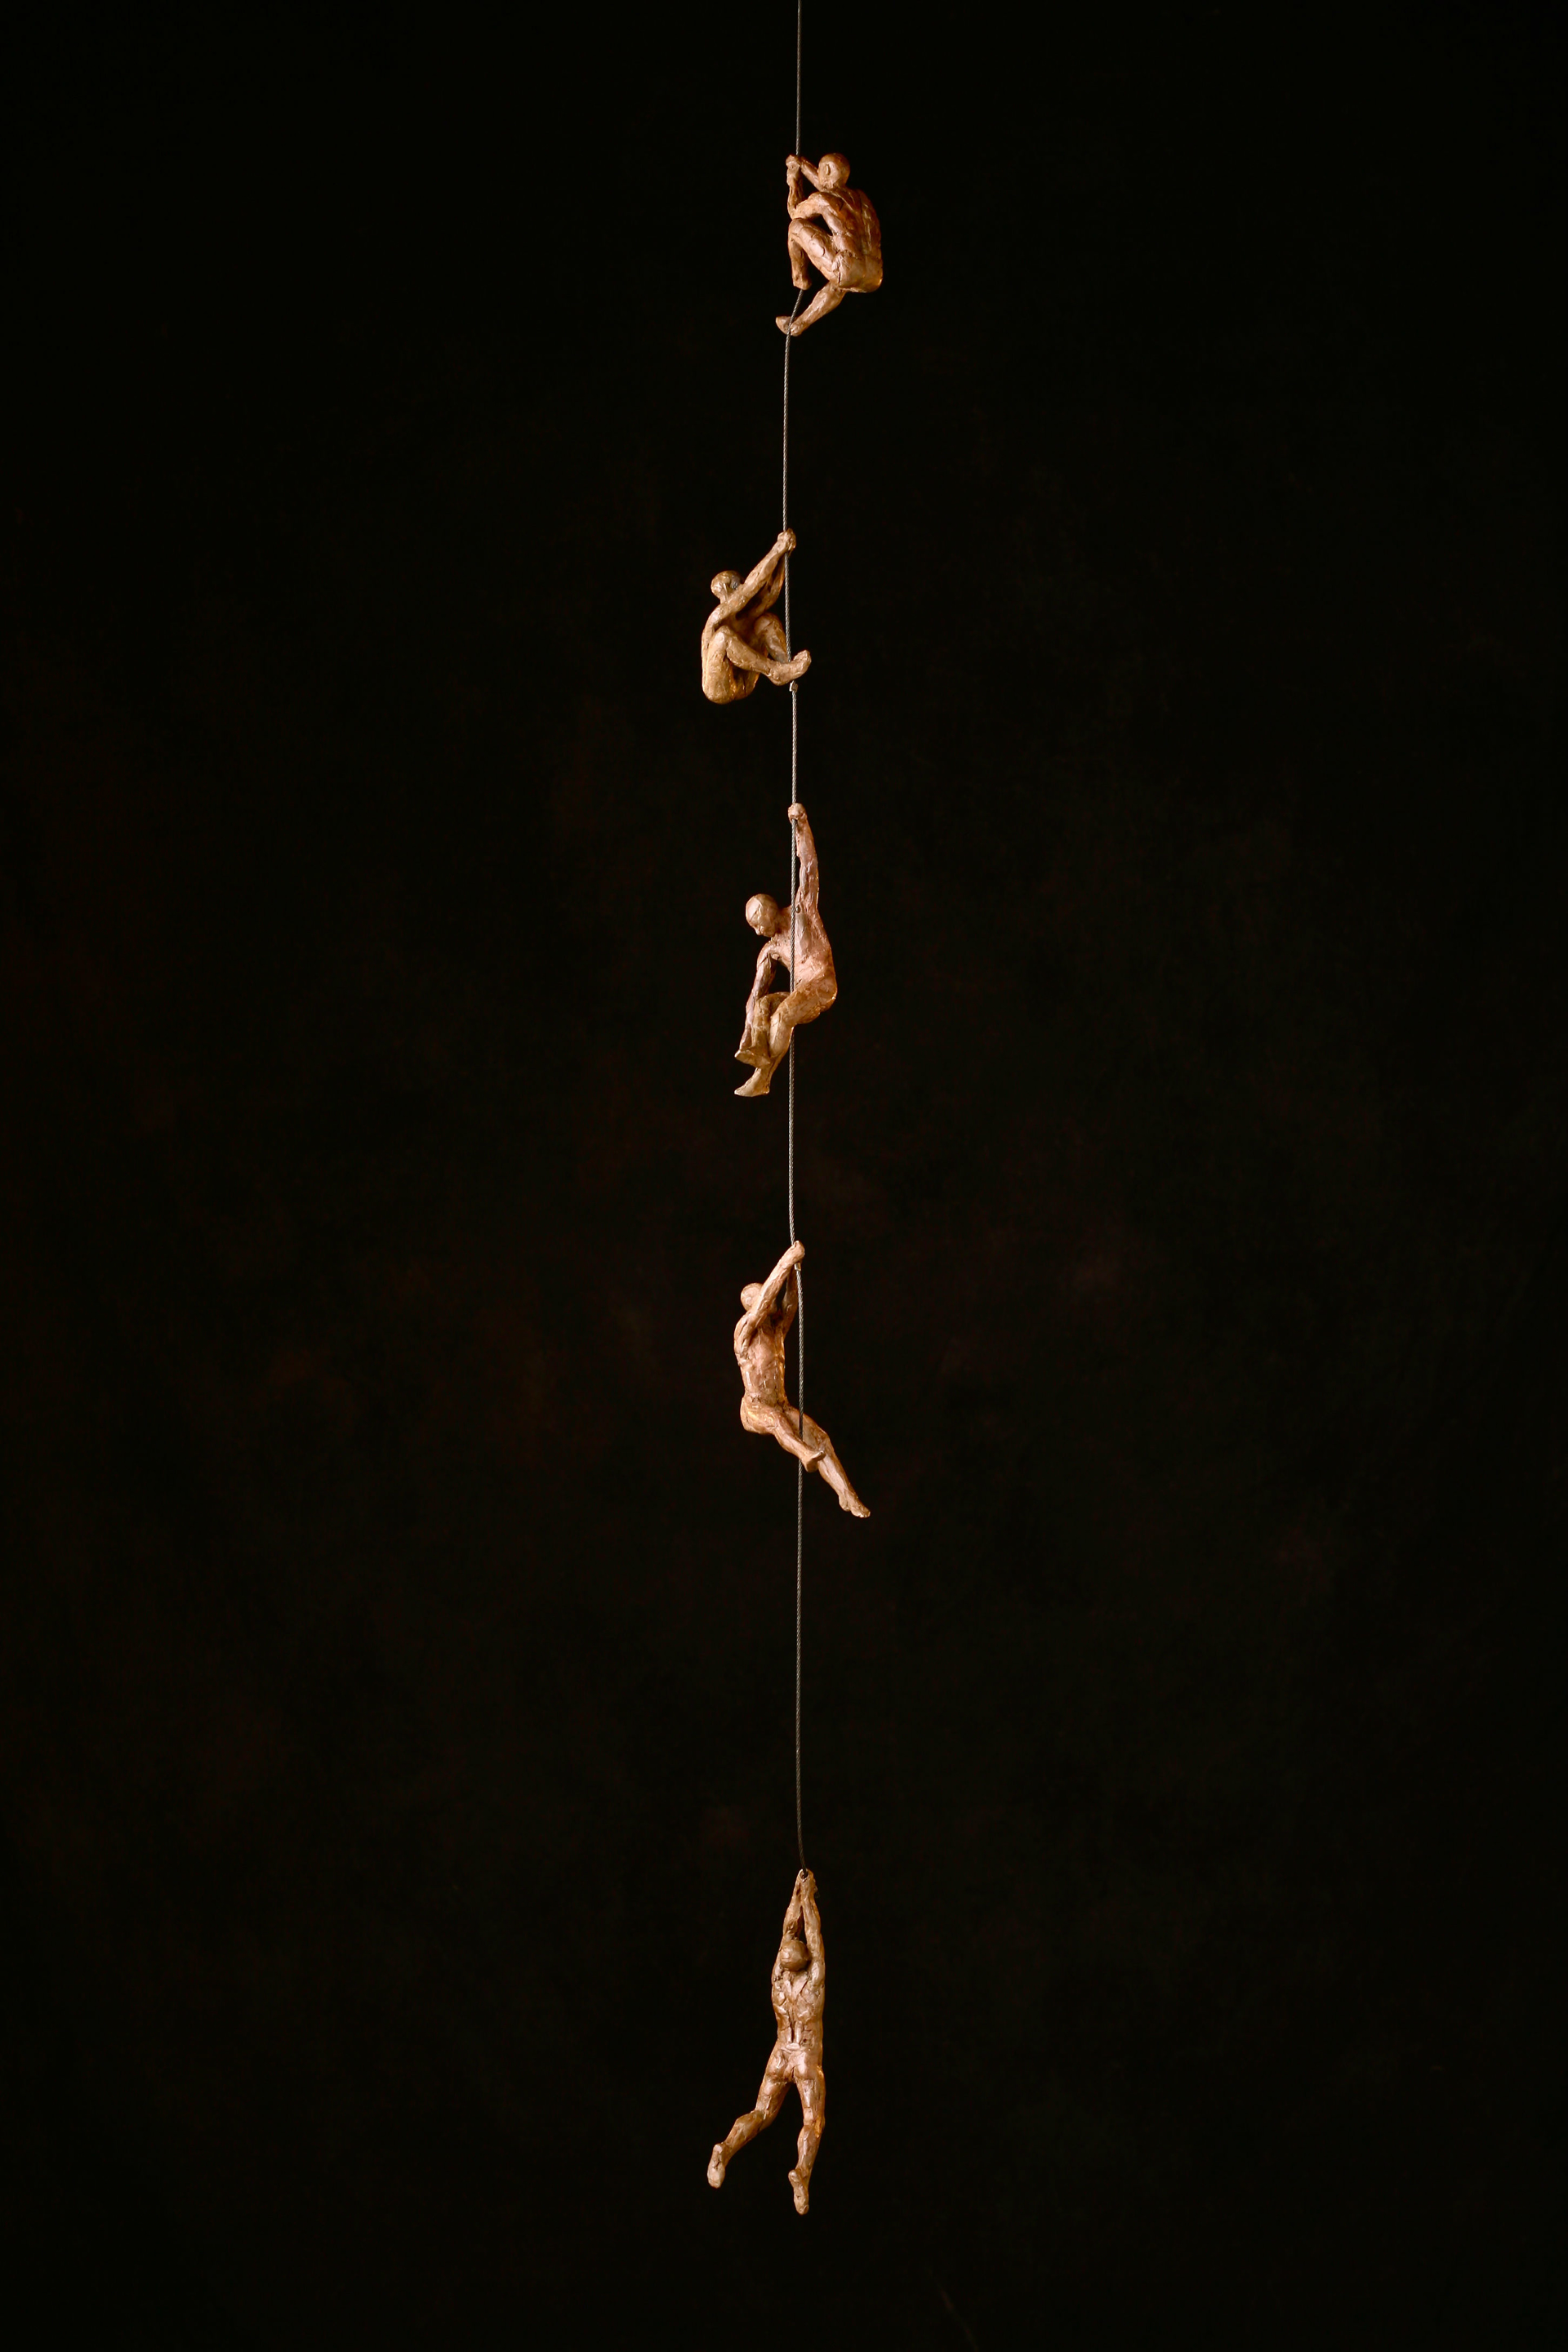 Rope Climbers  by Bill Starke